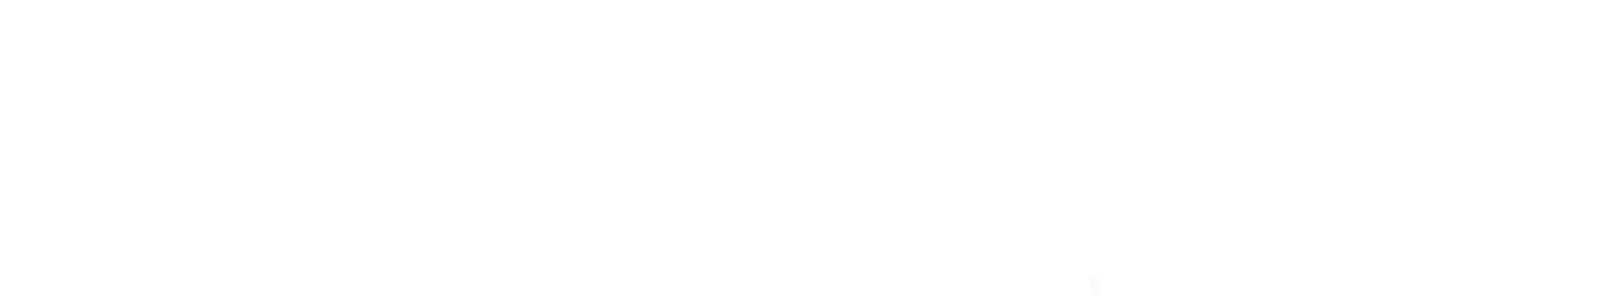 BROSWARM logo